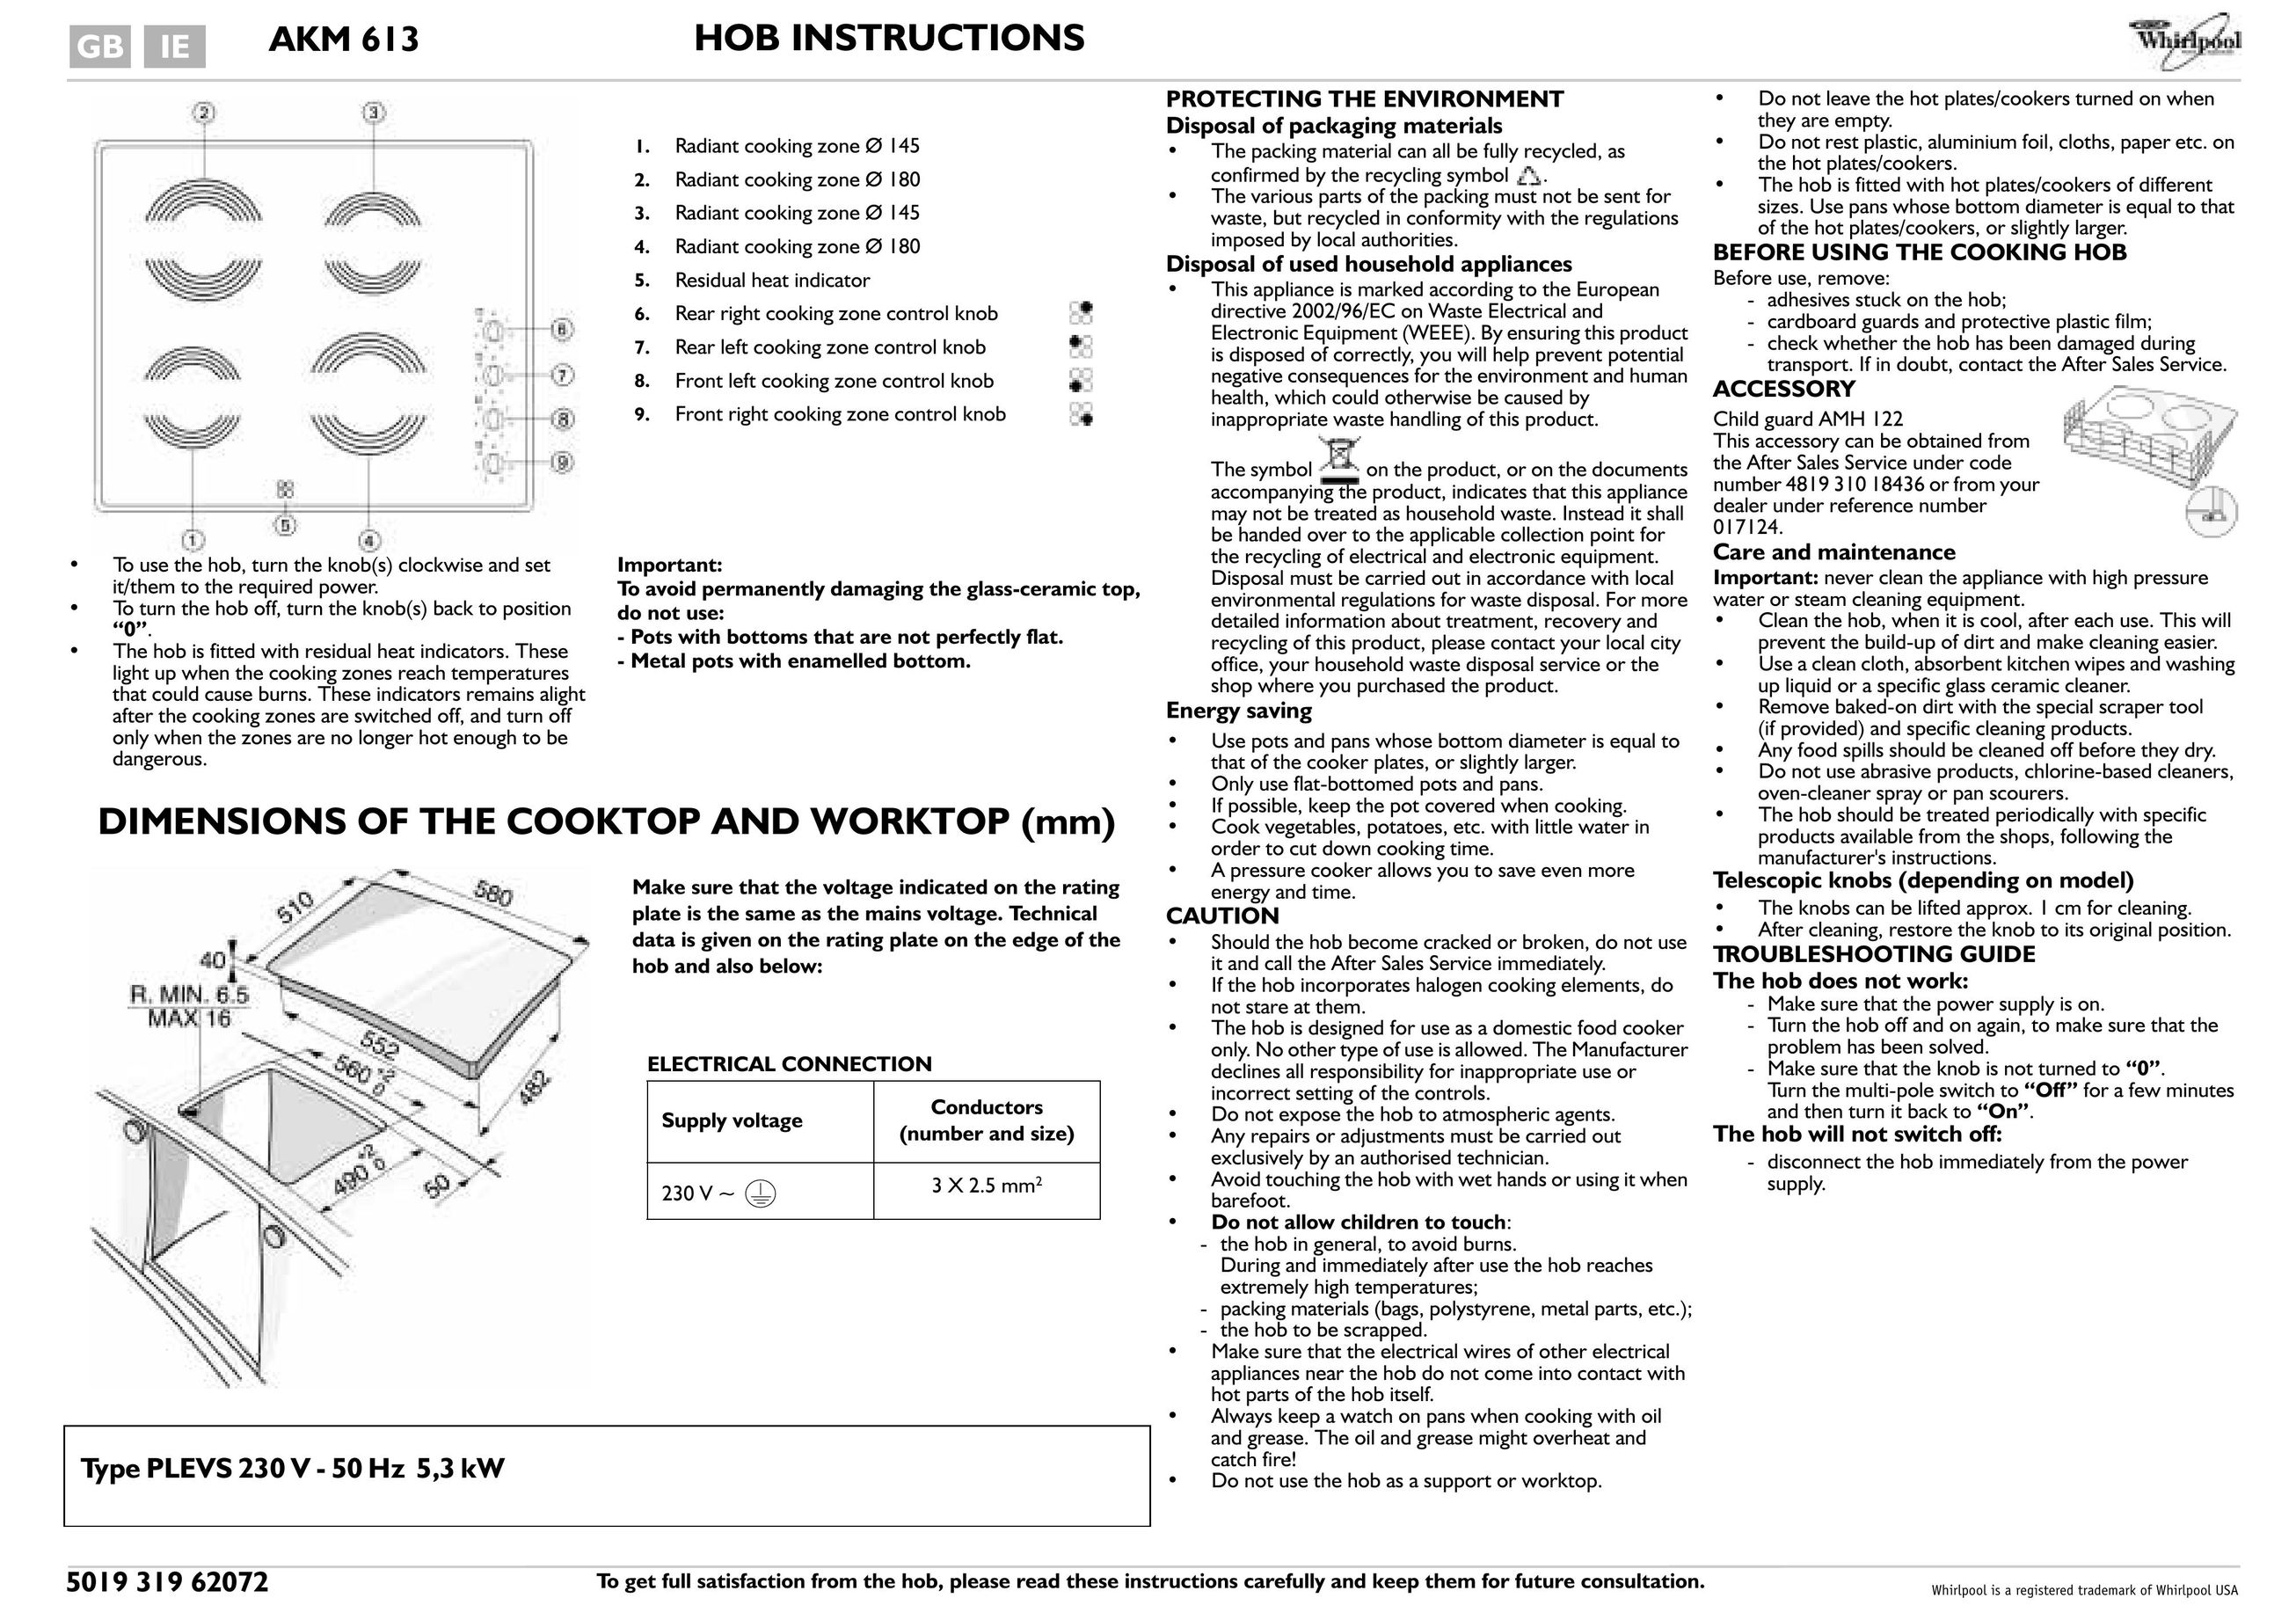 Whirlpool AKM 613 Cooktop User Manual